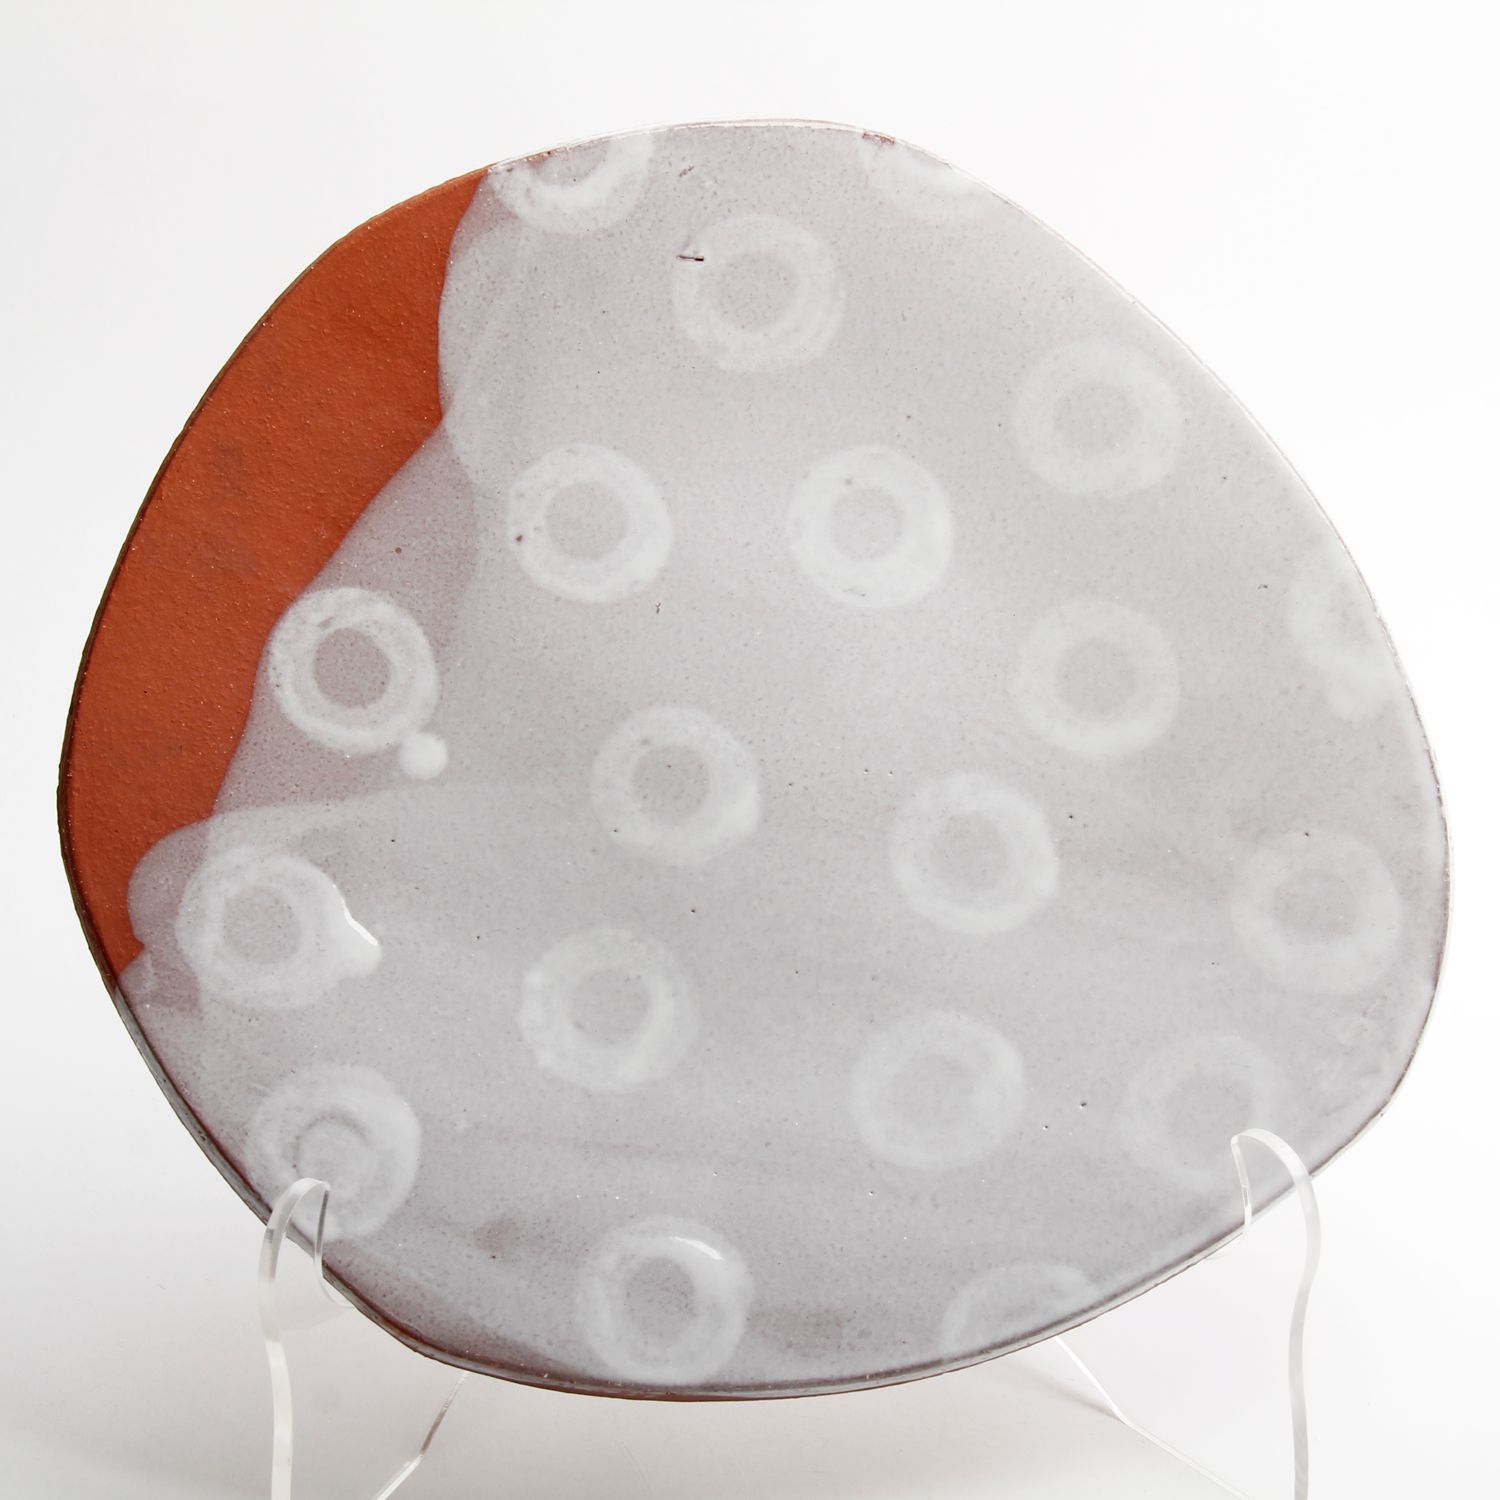 Mary McKenzie: Large White Circles Platter Product Image 1 of 2